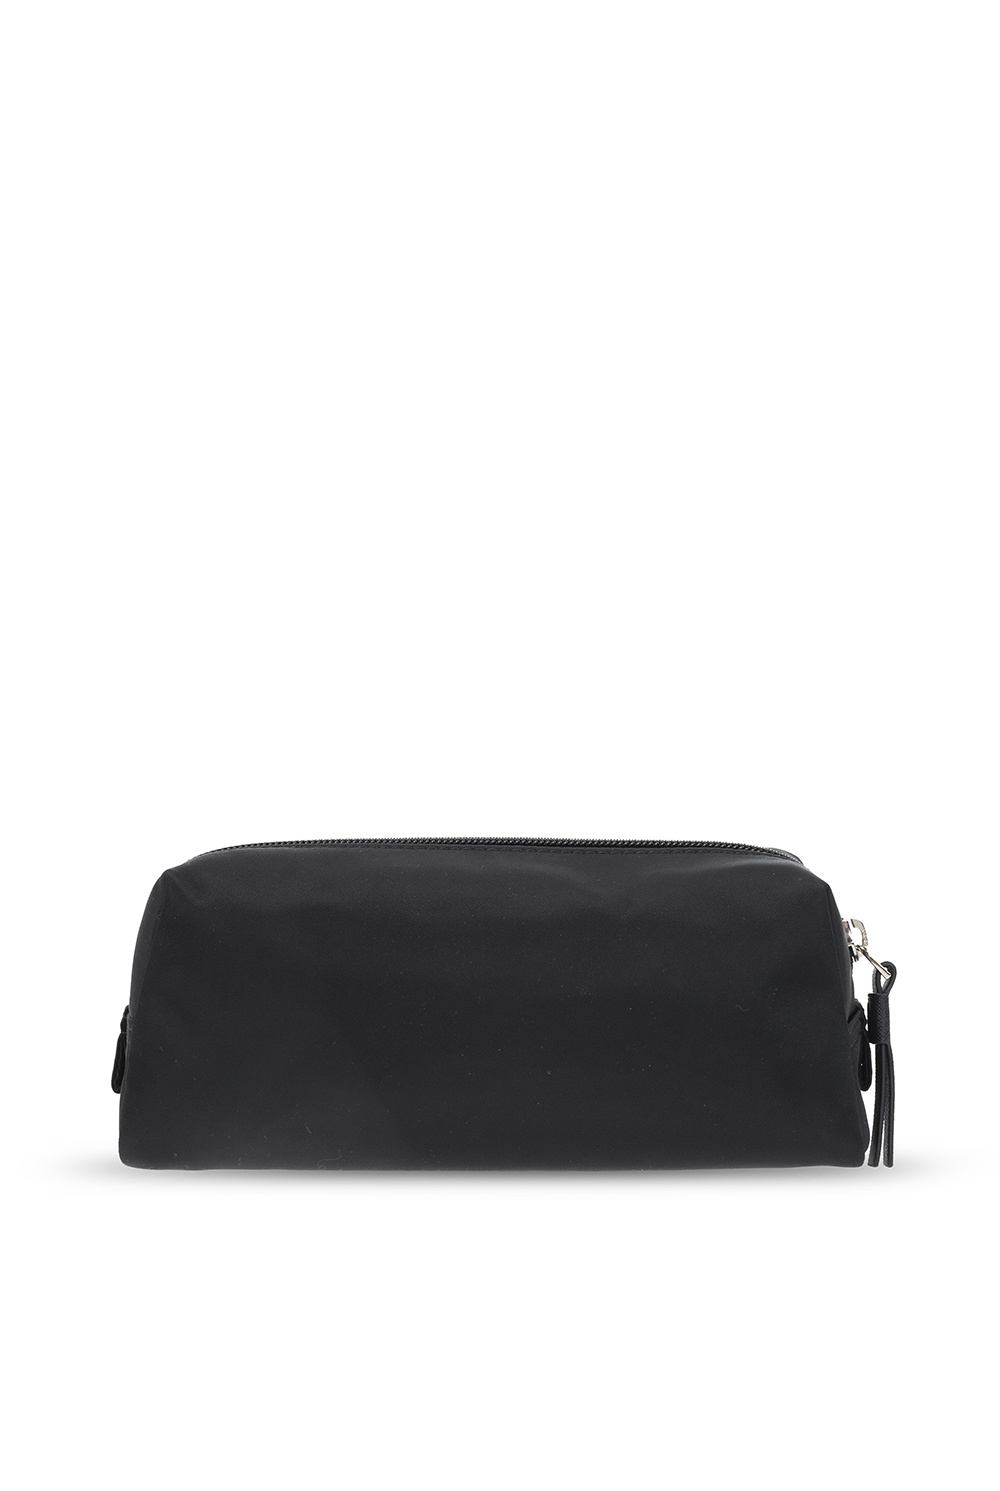 IetpShops Croatia - Black Wash bag Pochette with logo Tory Burch